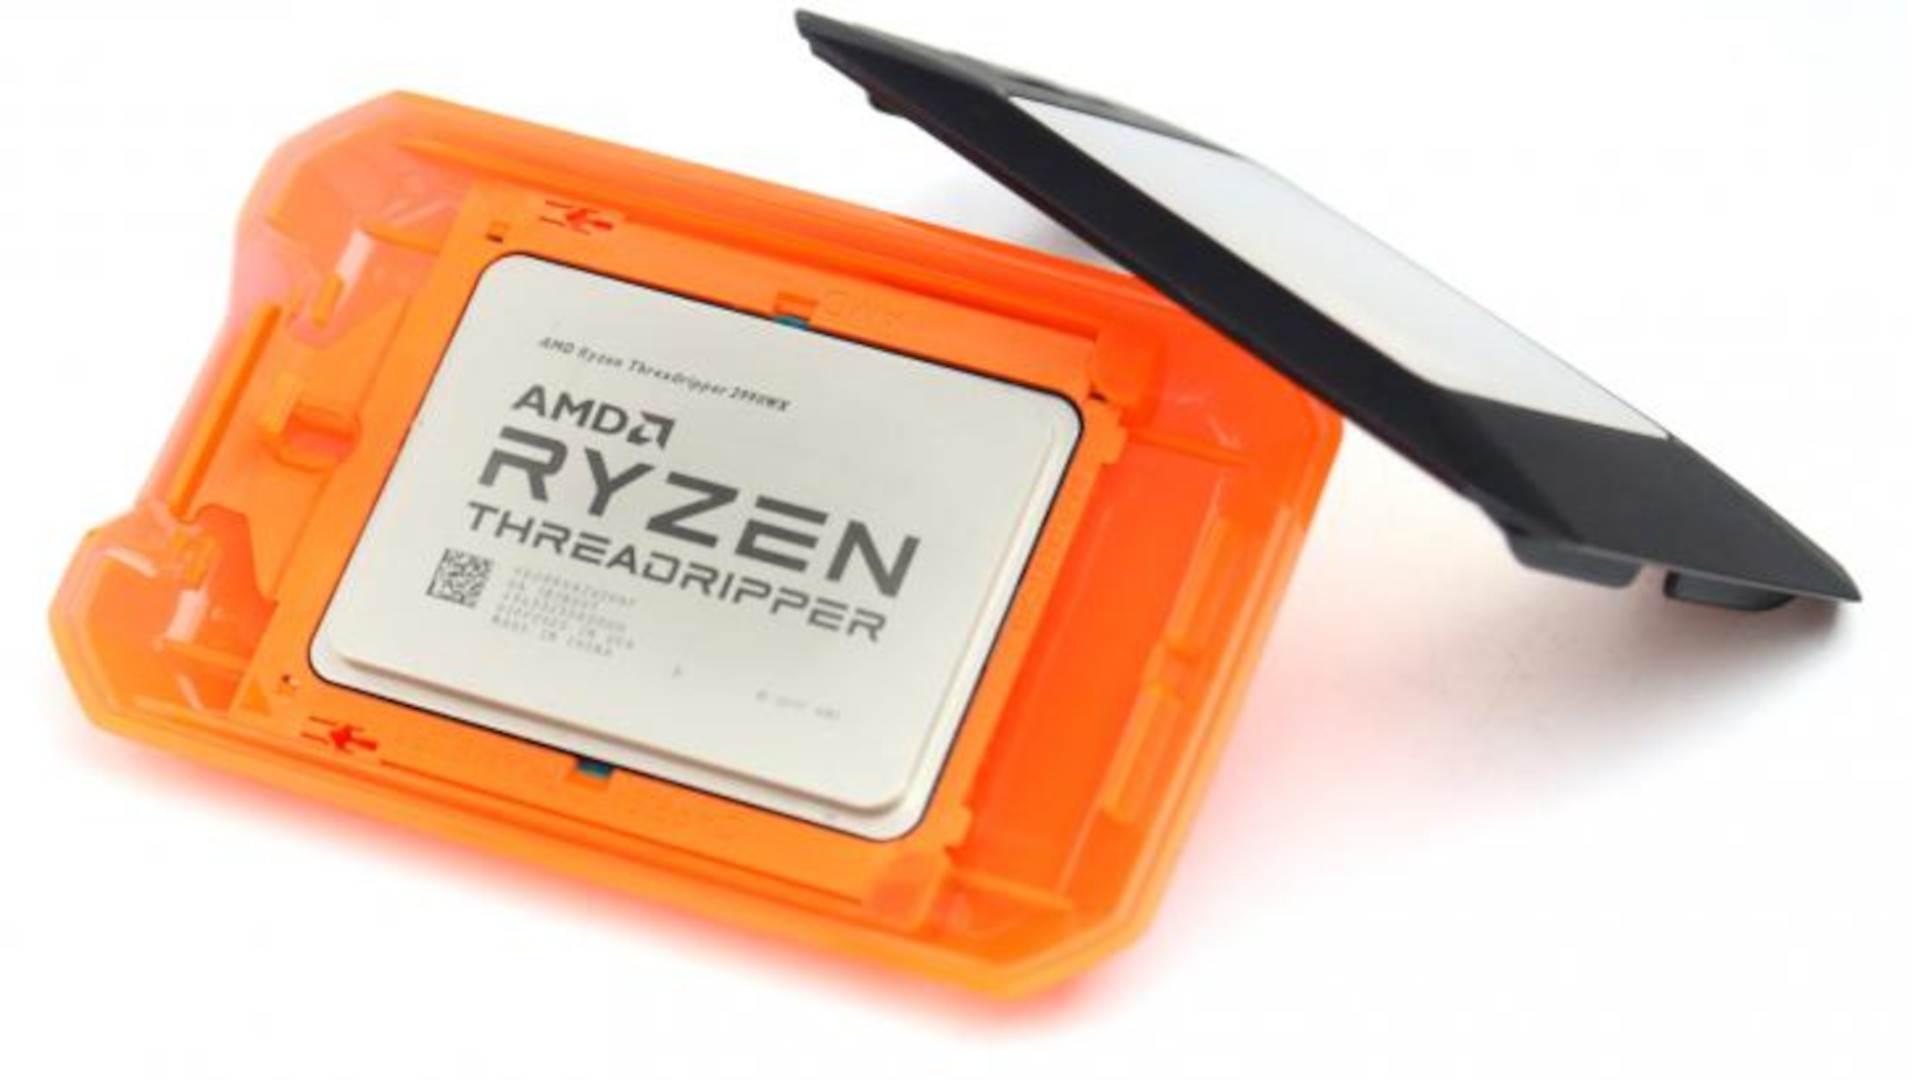 AMD Ryzen TR 2990WX 3